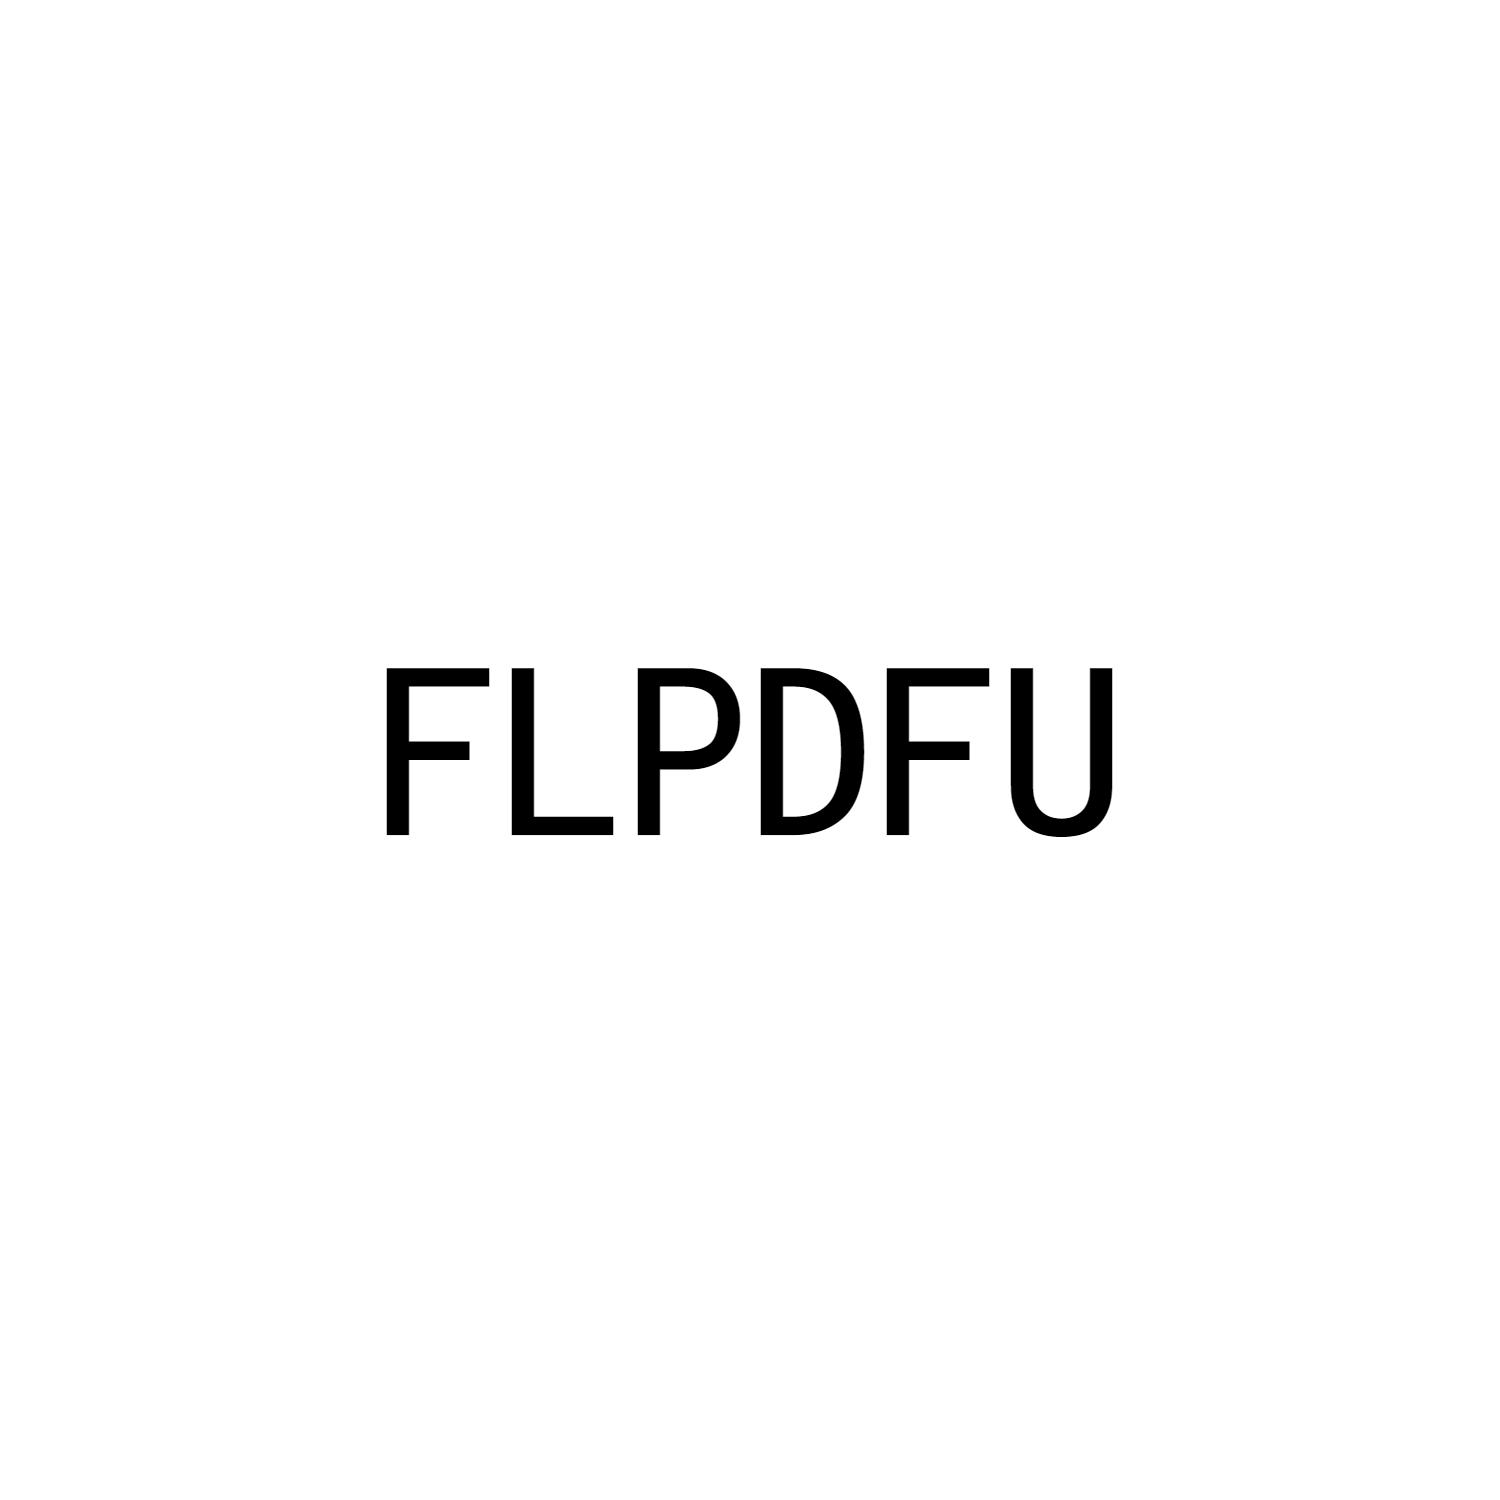 FLPDFU